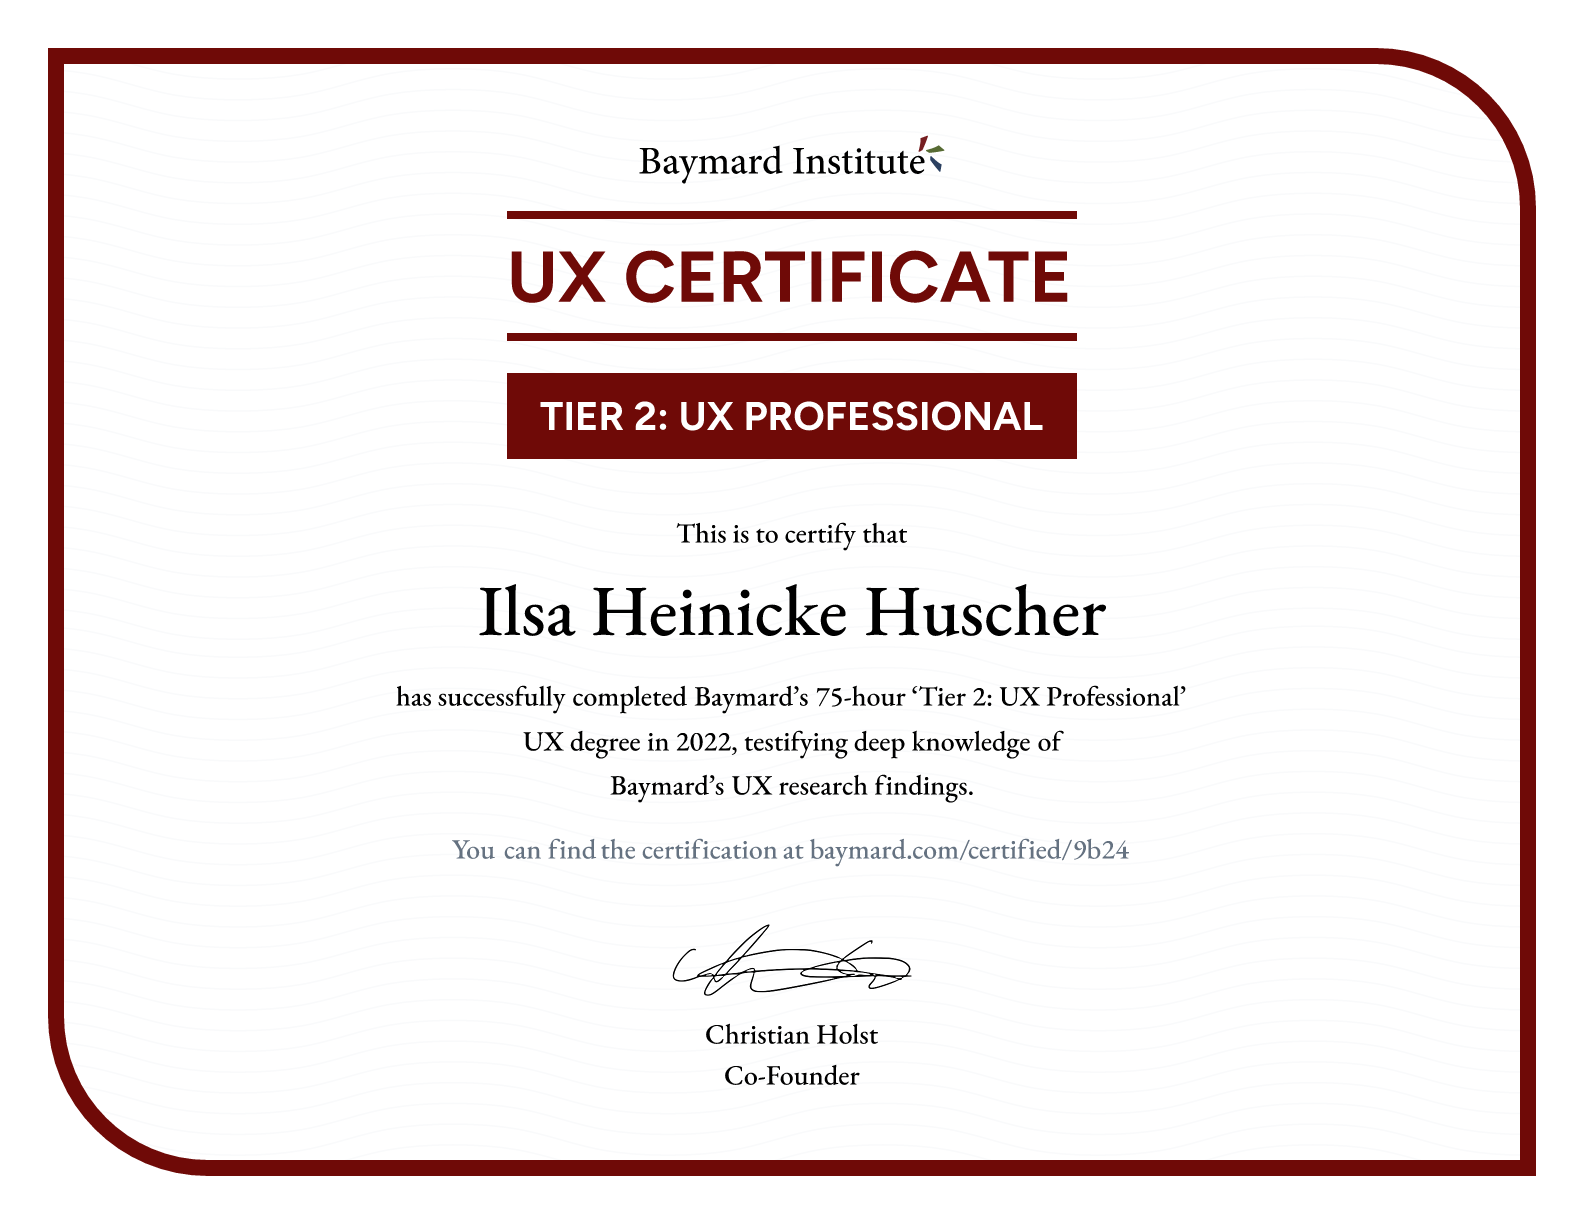 Ilsa Heinicke Huscher’s certificate